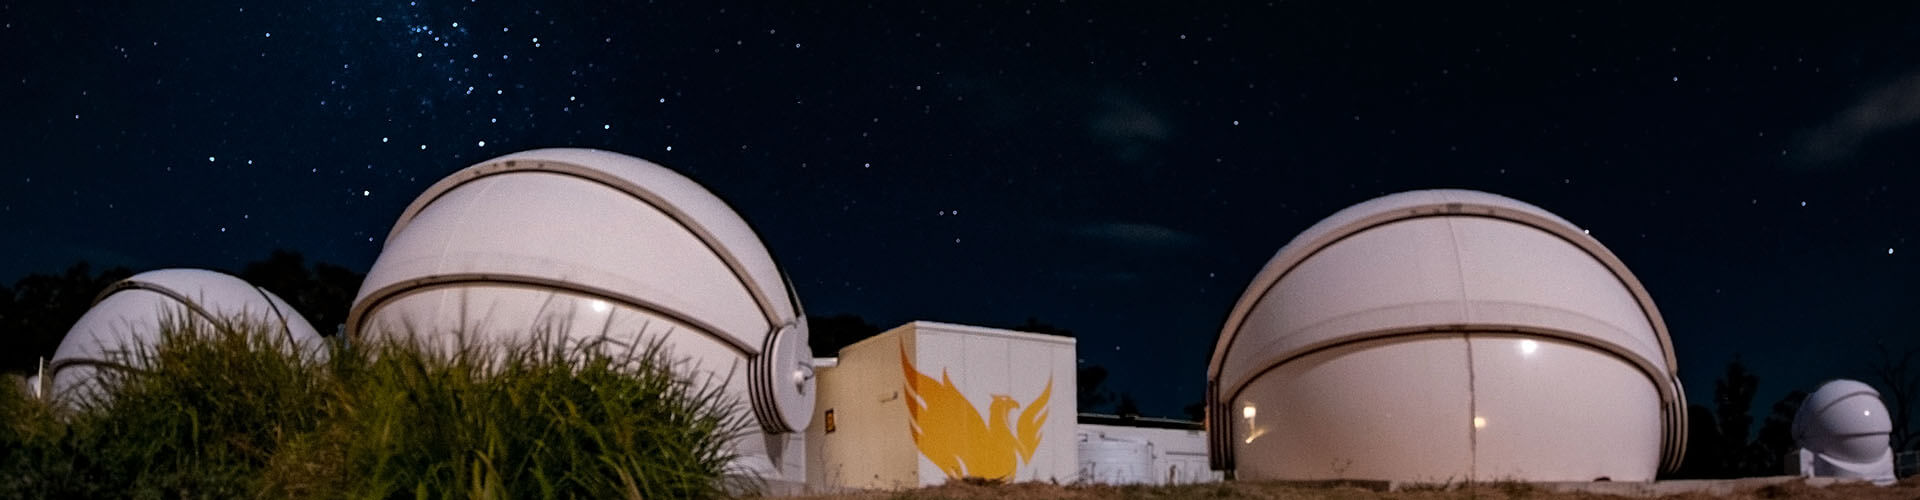 telescope domes under starry night